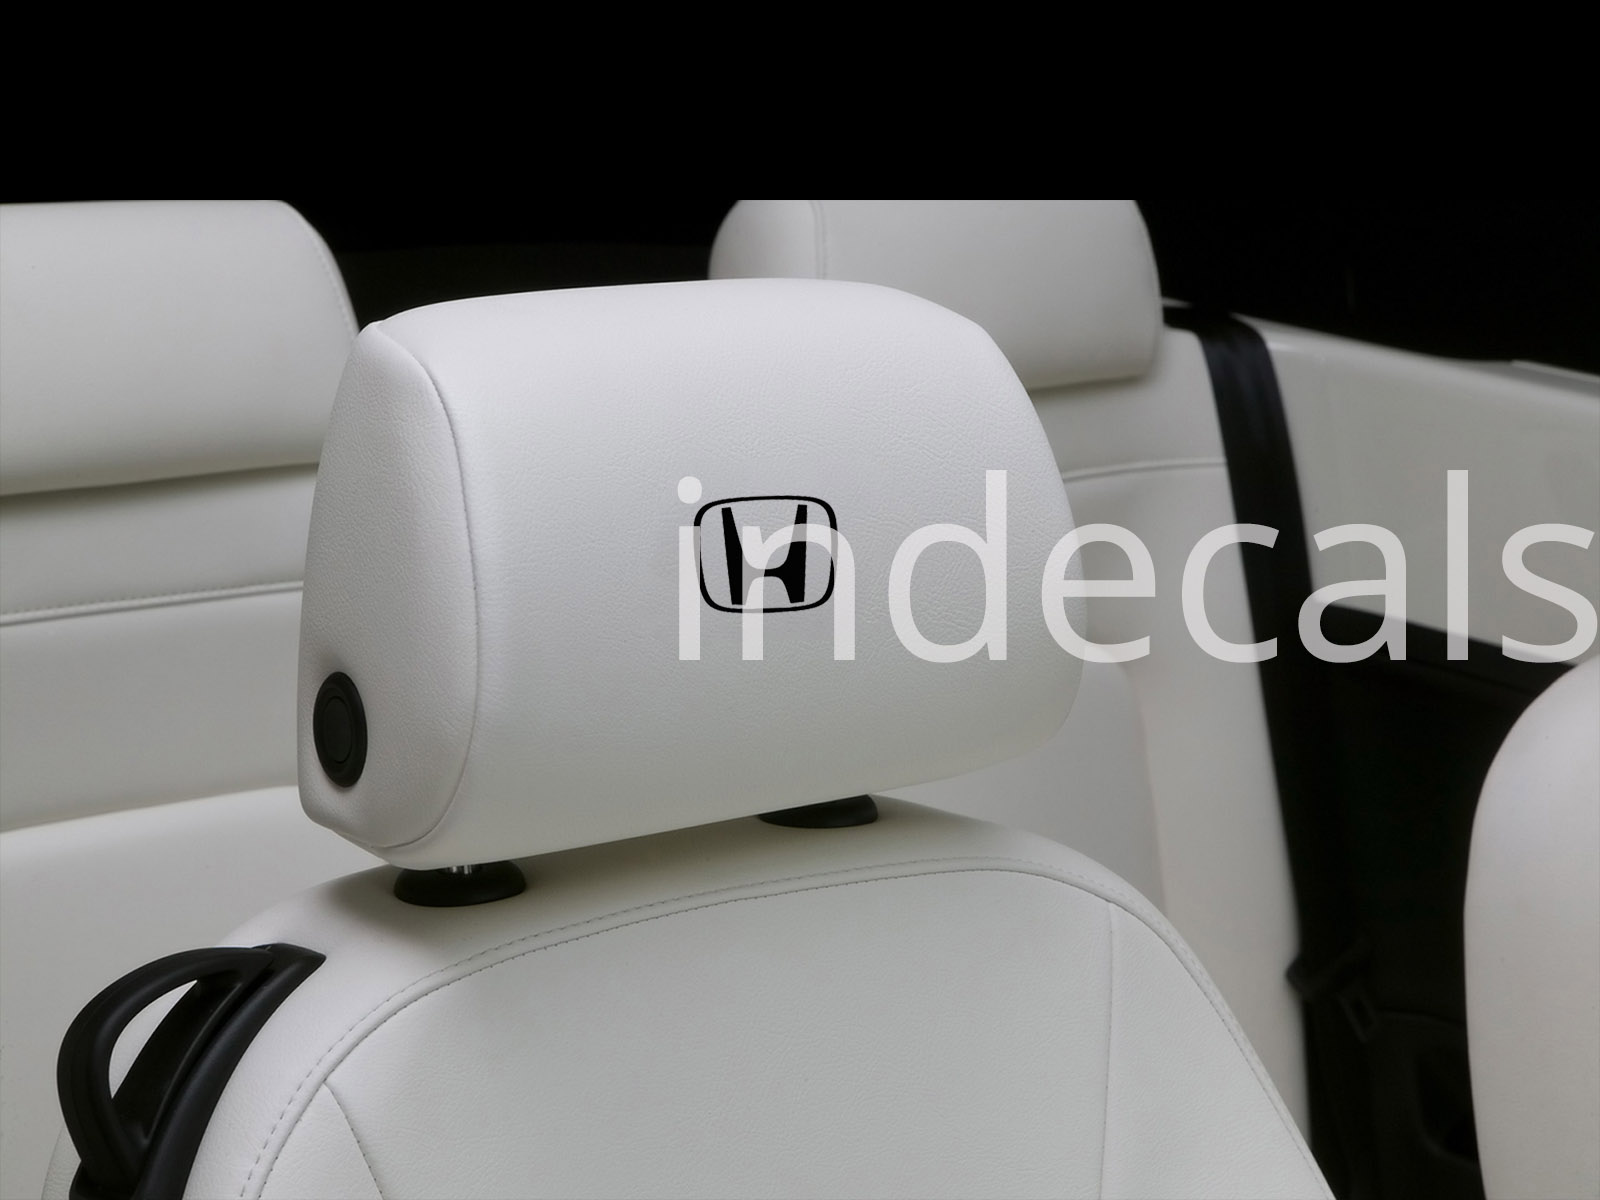 6 x Honda Stickers for Headrests - Black